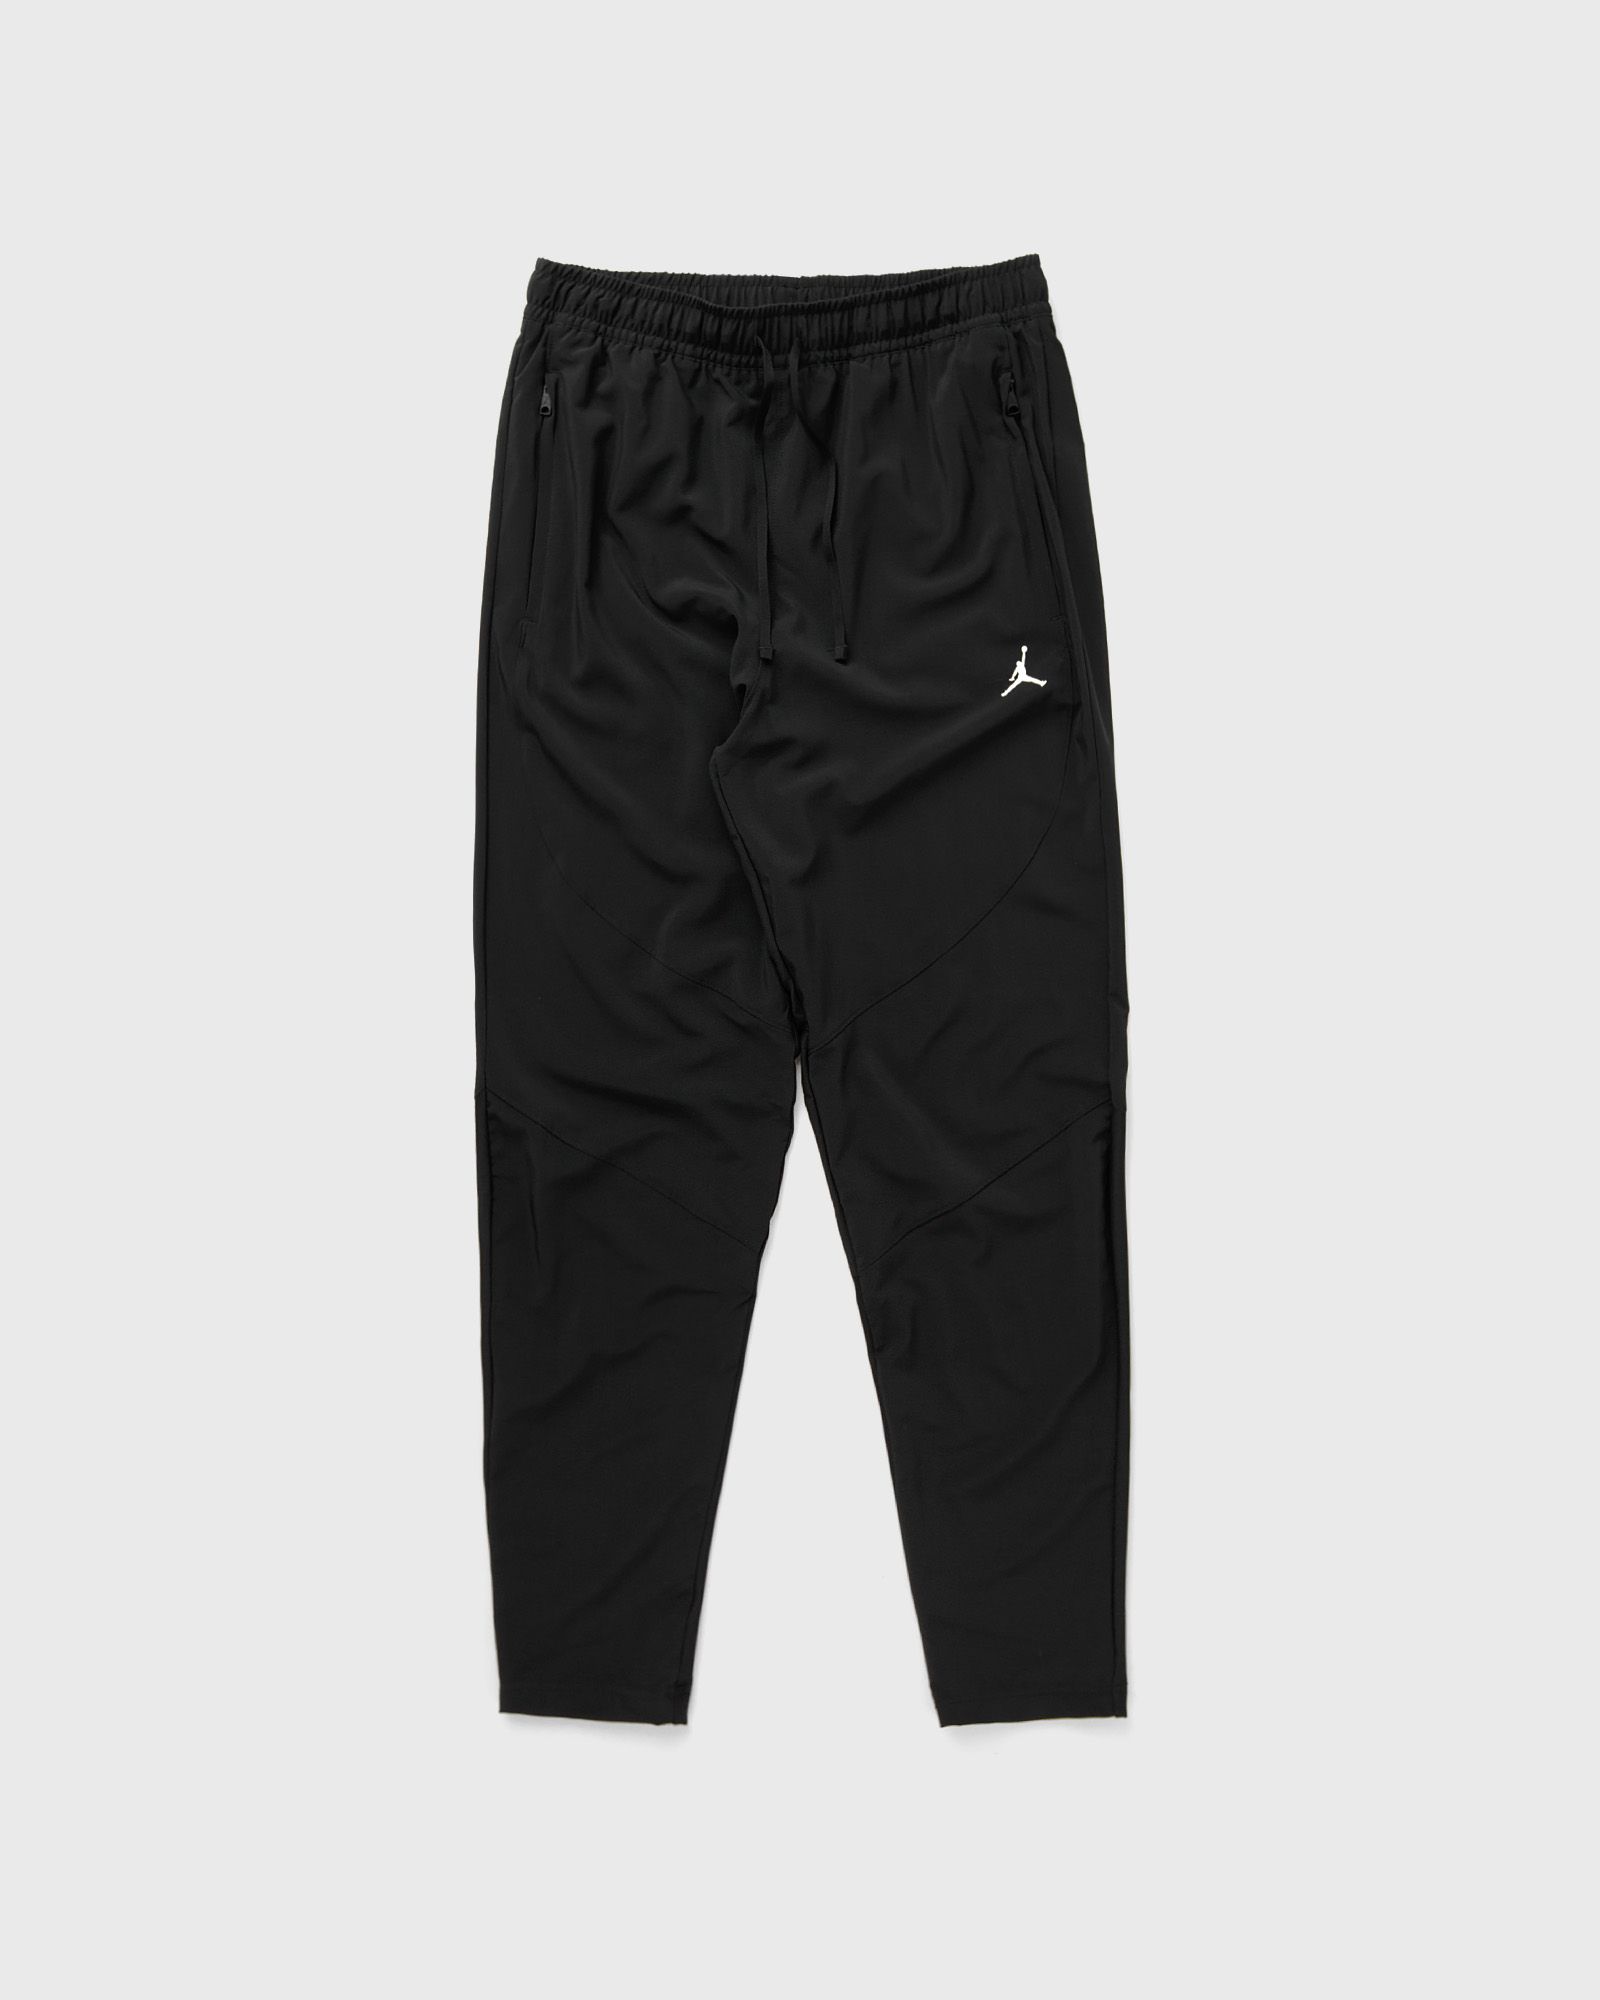 Jordan - sport dri-fit woven pants men sweatpants black in größe:xl